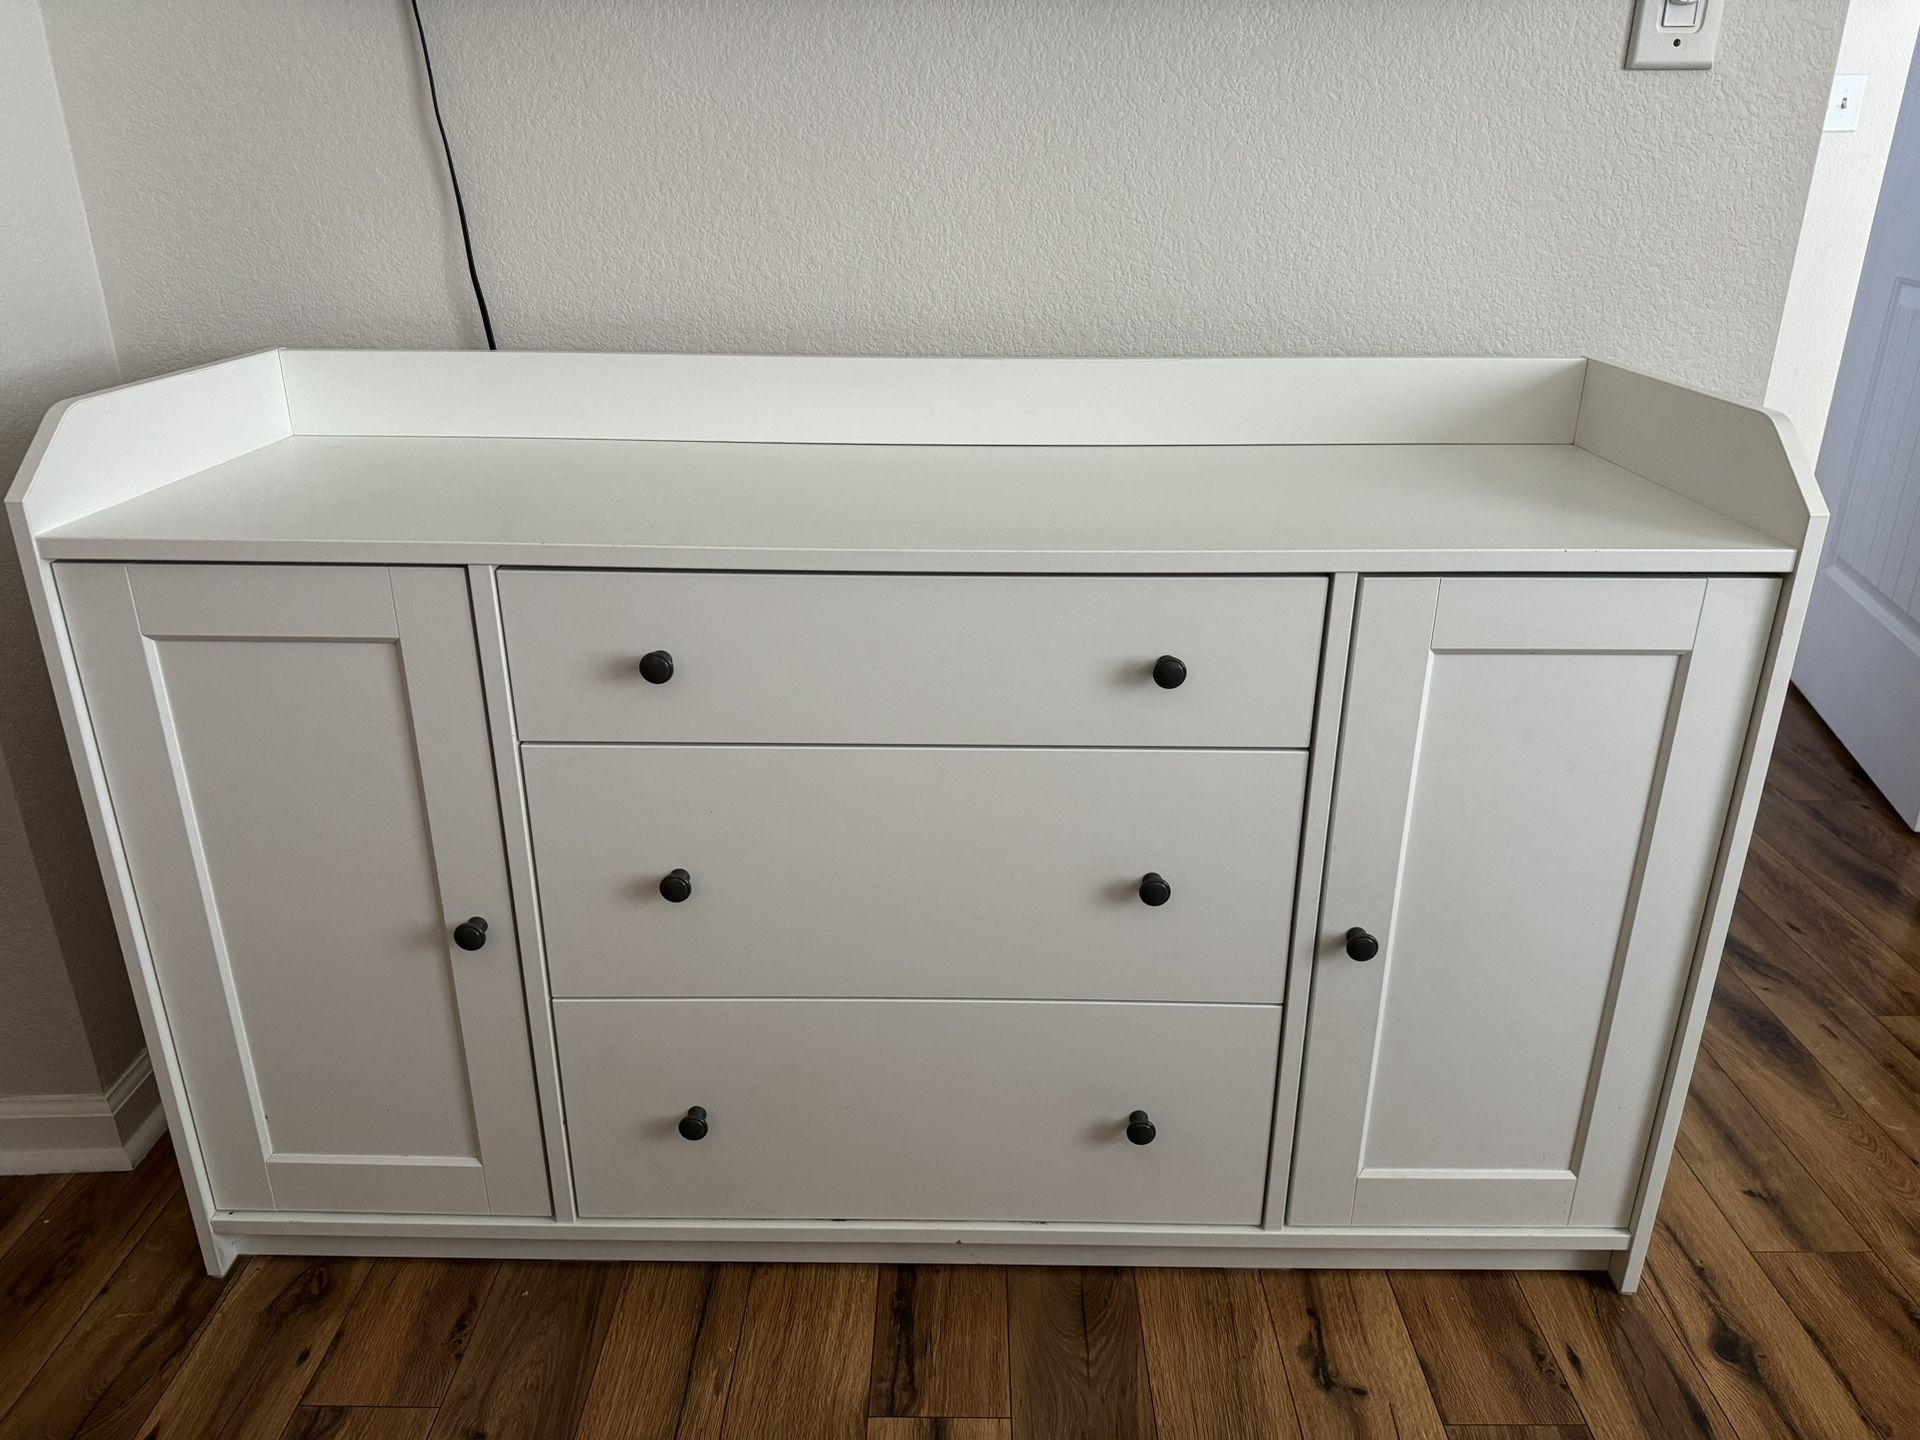 IKEA white dresser